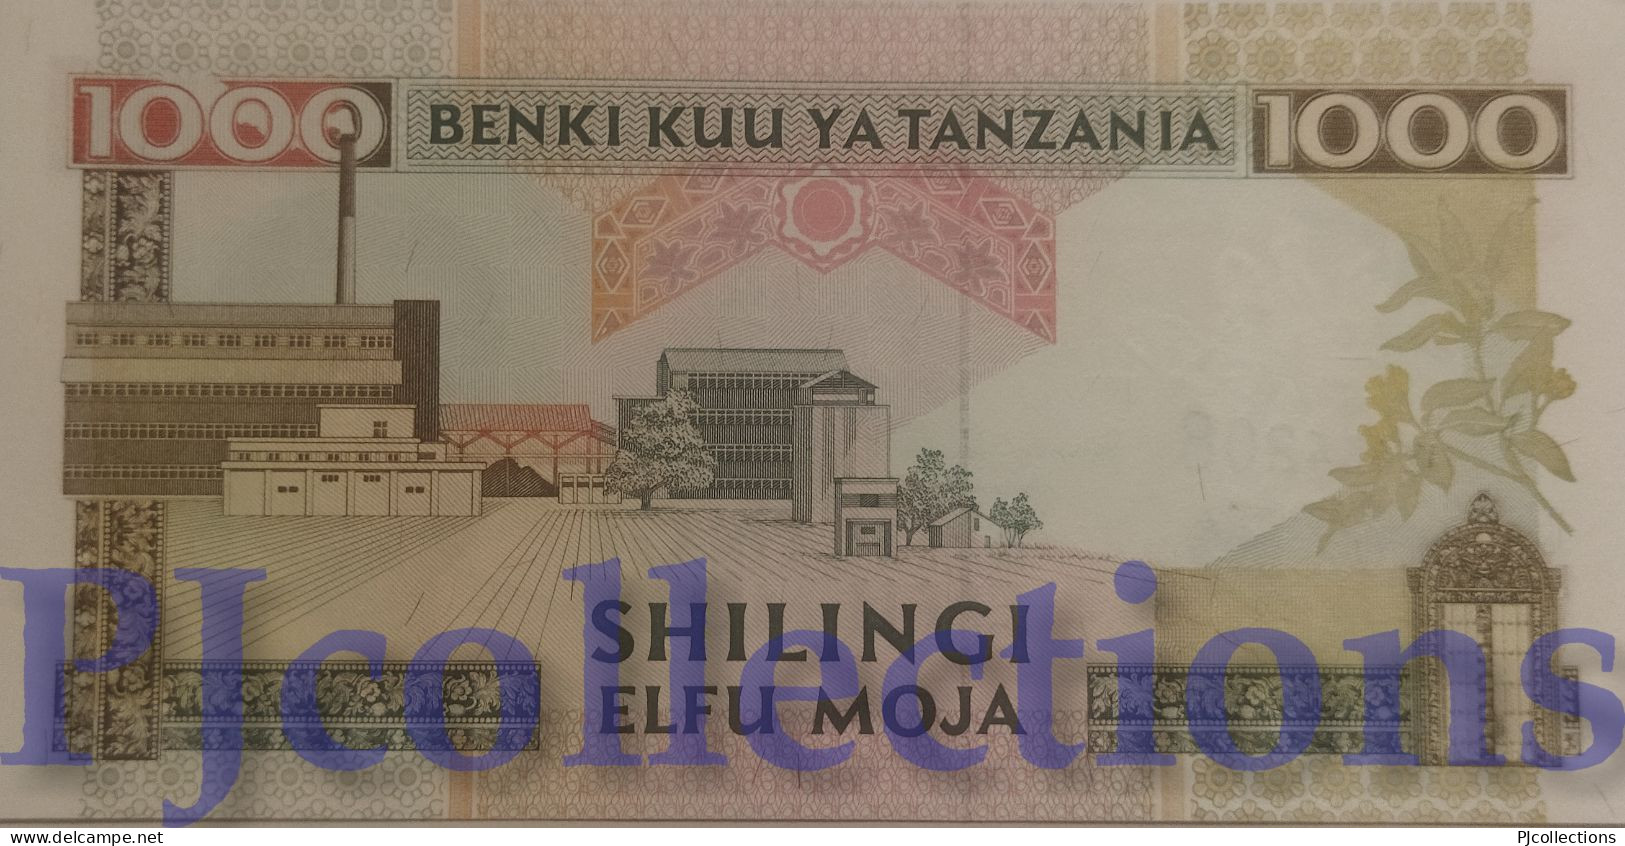 TANZANIA 1000 SHILINGI 1993 PICK 27c UNC - Tansania